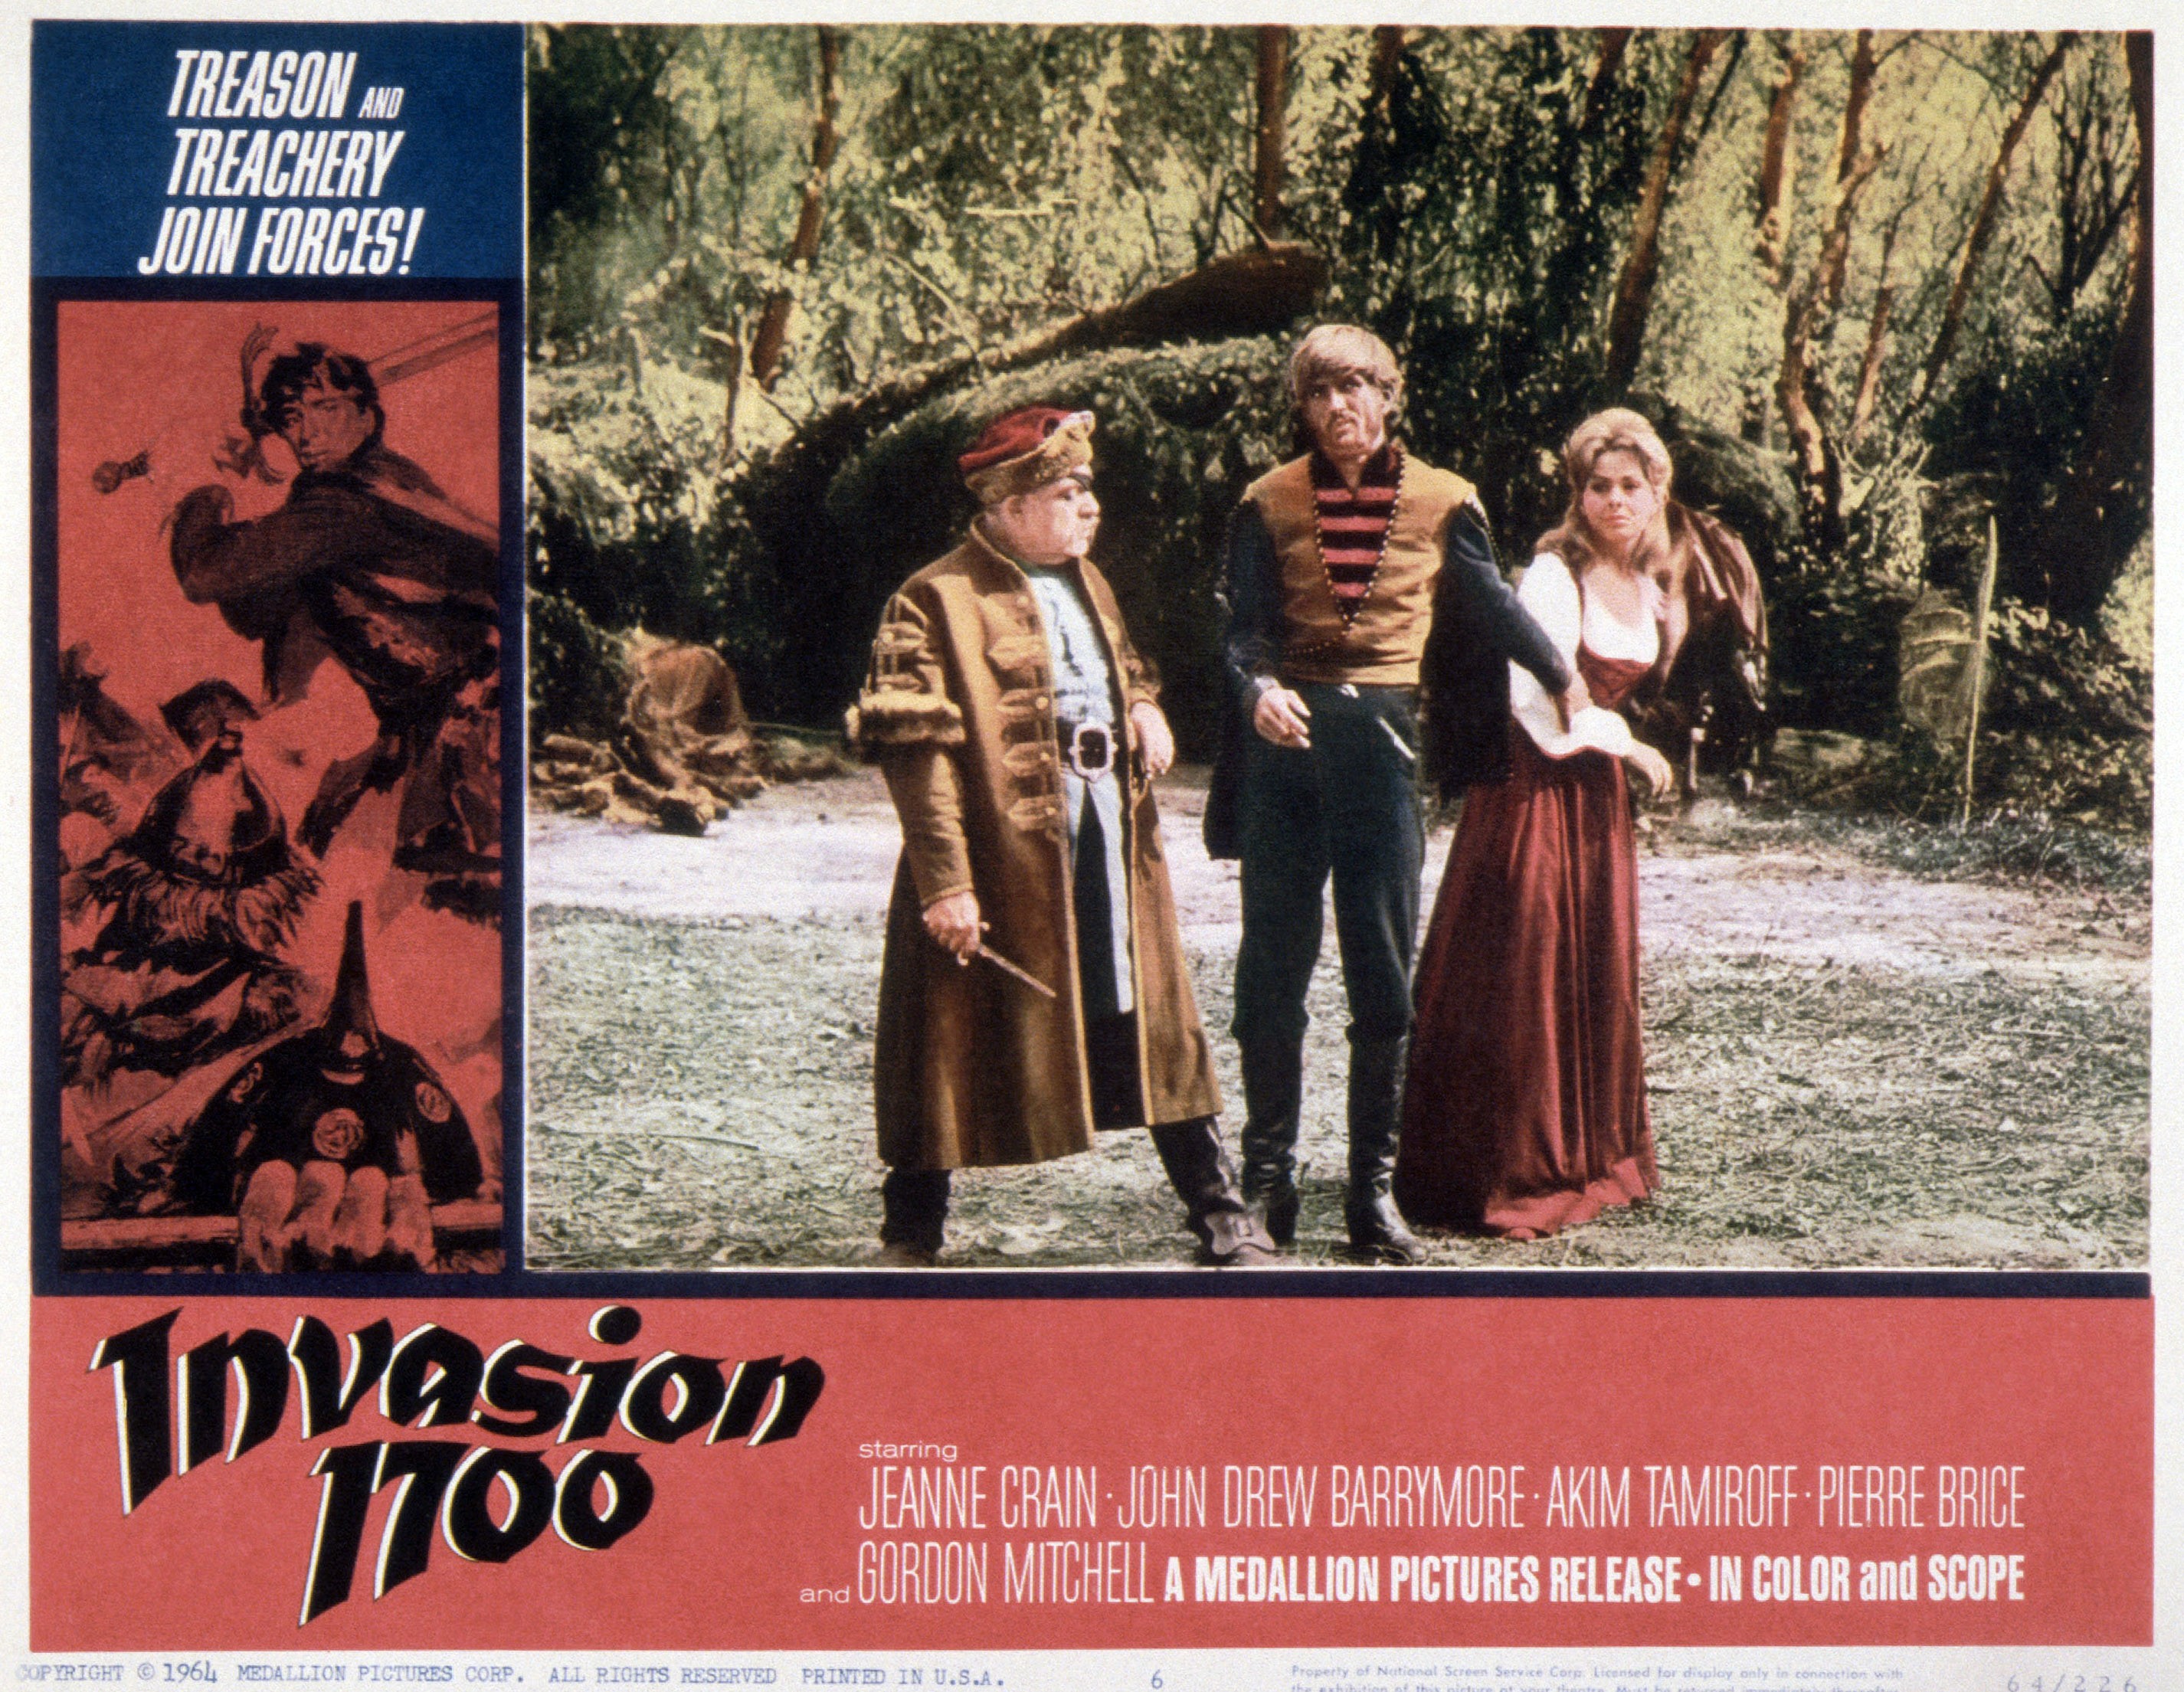 Akim Tamiroff, John Drew Barrymore, Jeanne Crain, en el cartel de "Invasión 1700" en 1962. | Fuente: Getty Images